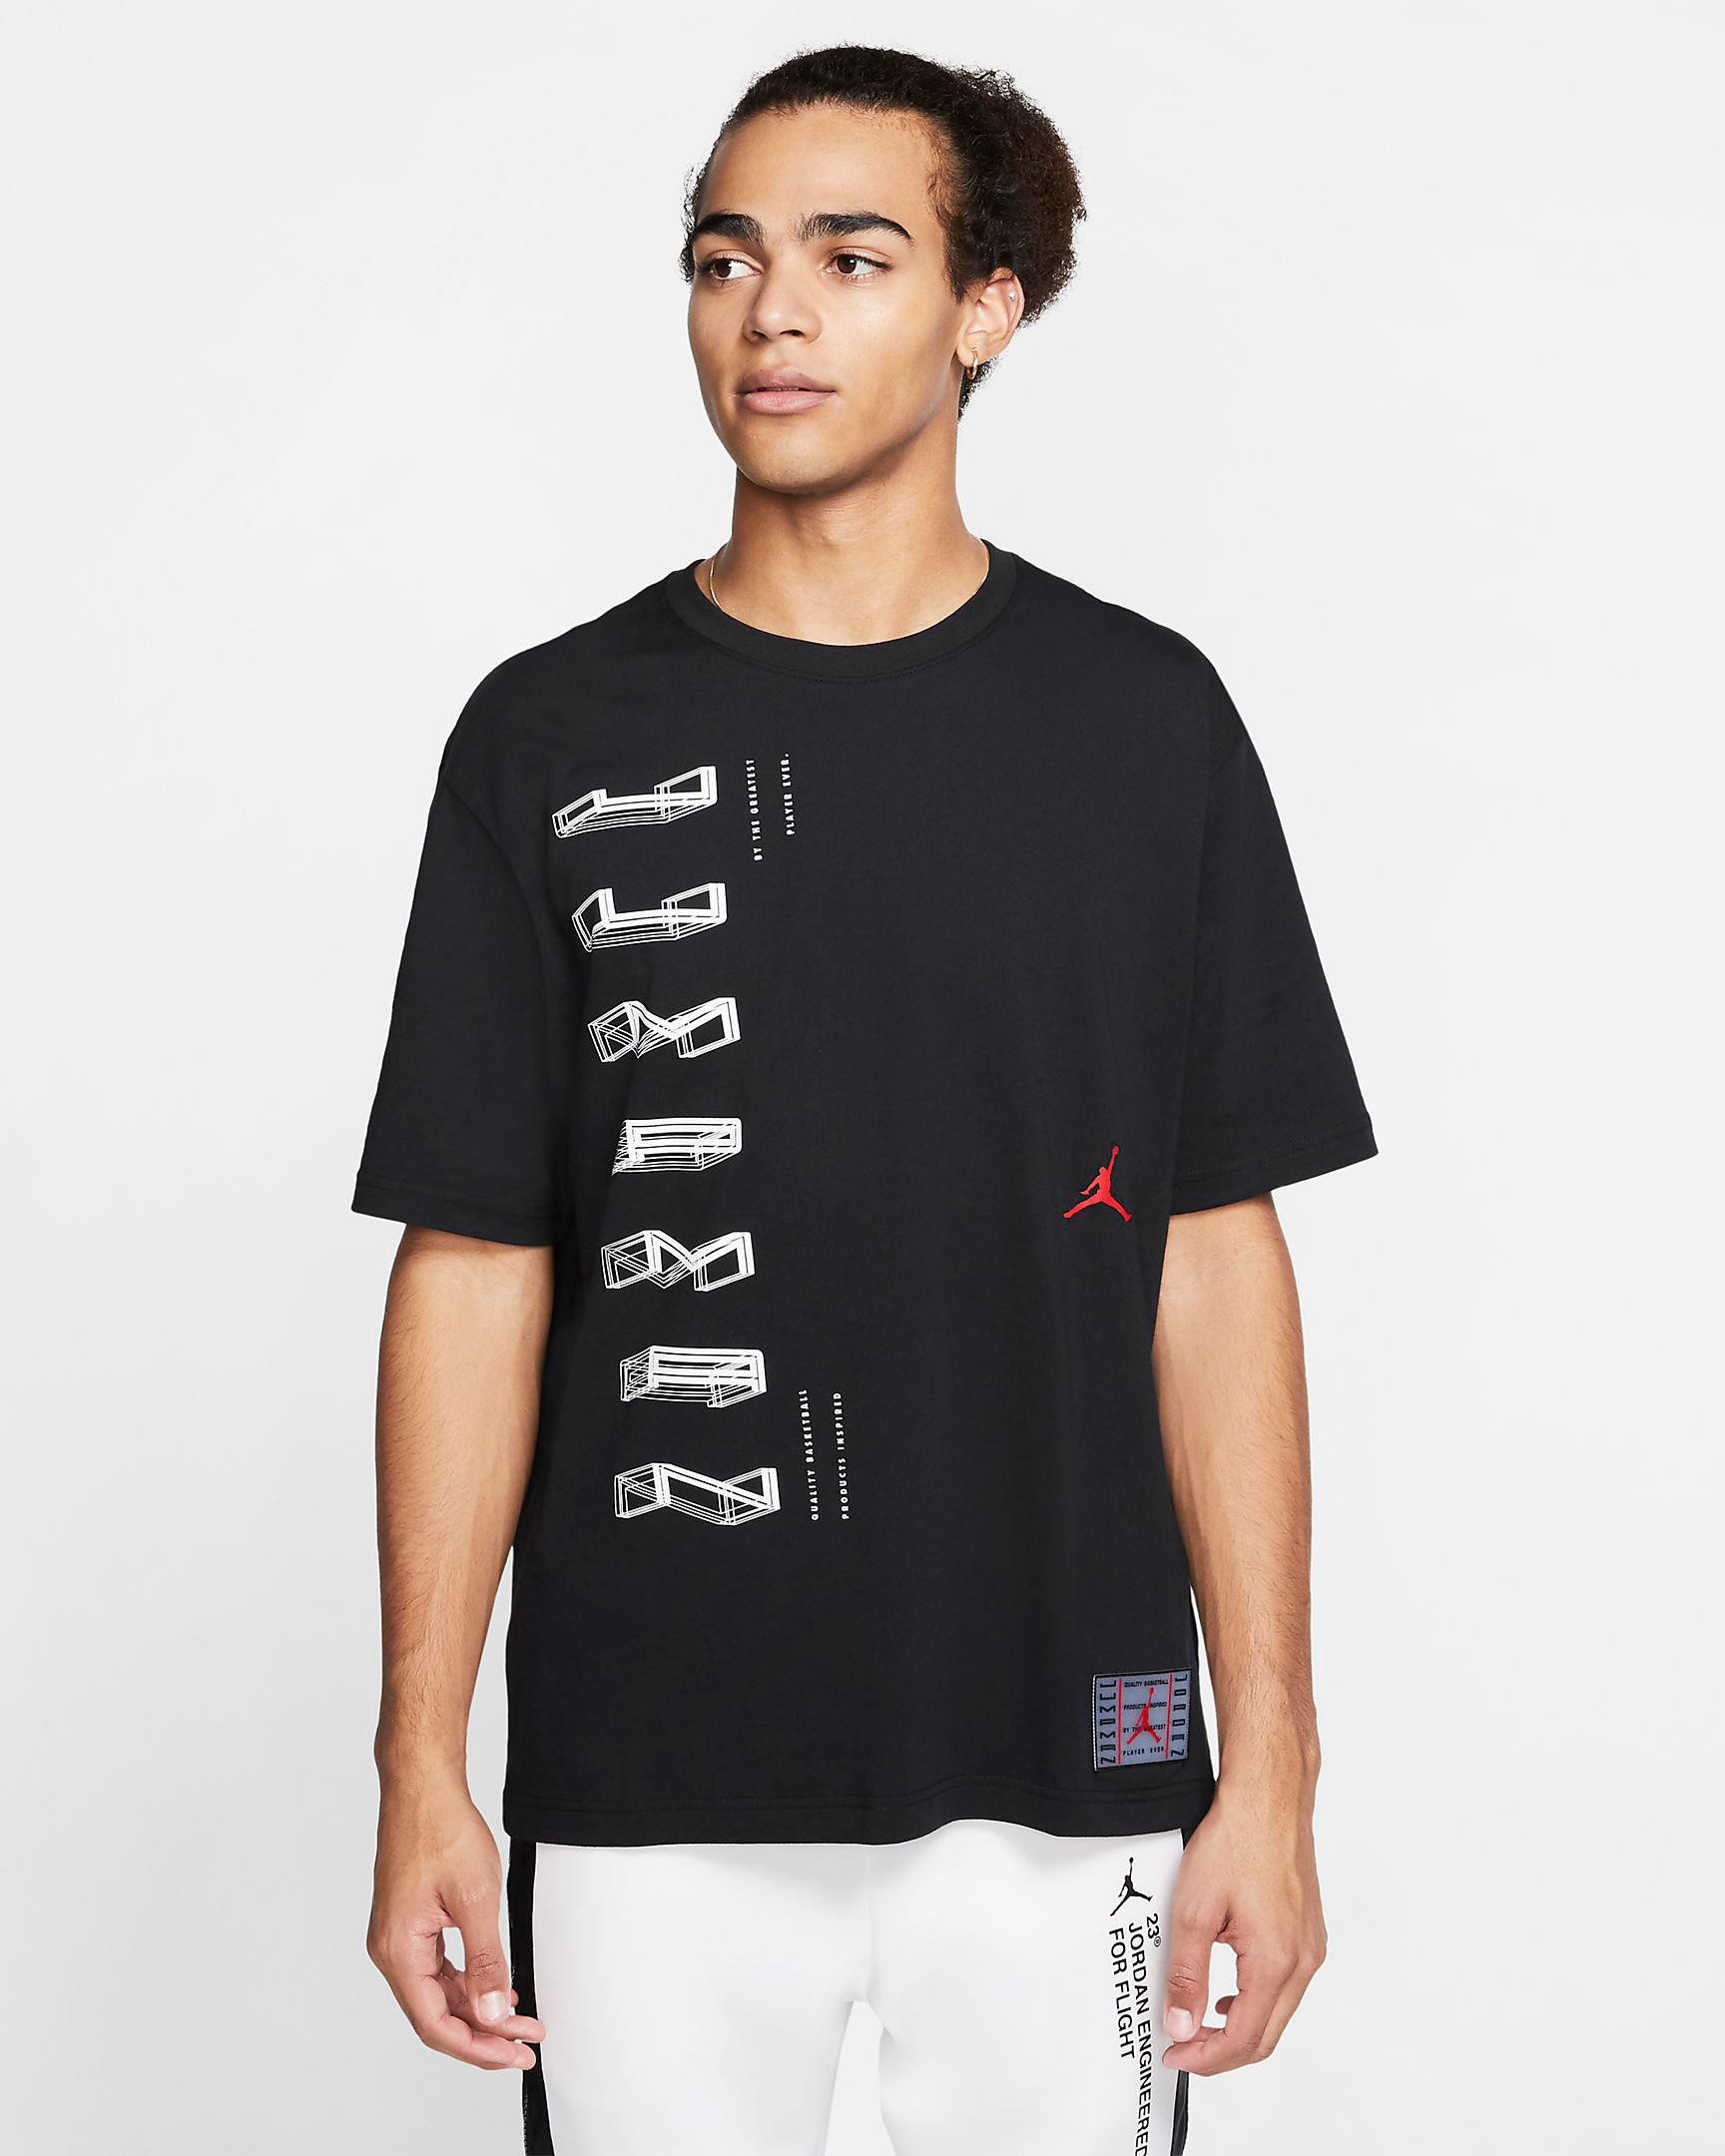 Air Jordan 11 Bred 2019 Shirt 